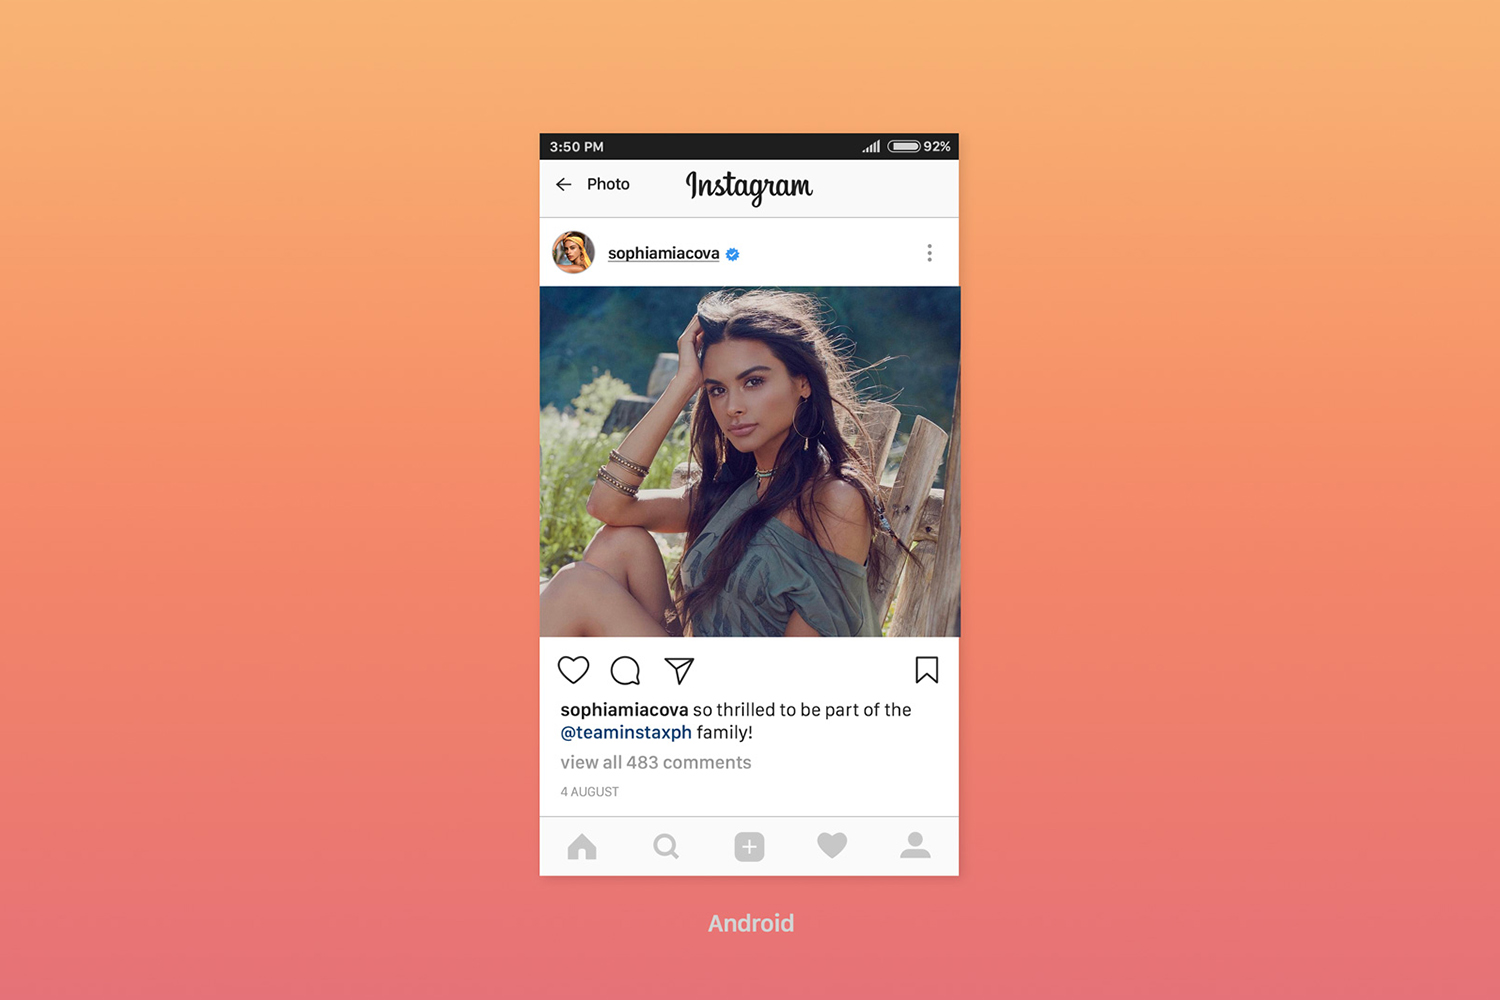 Instagram Feed Screen UI Mockup Free Download